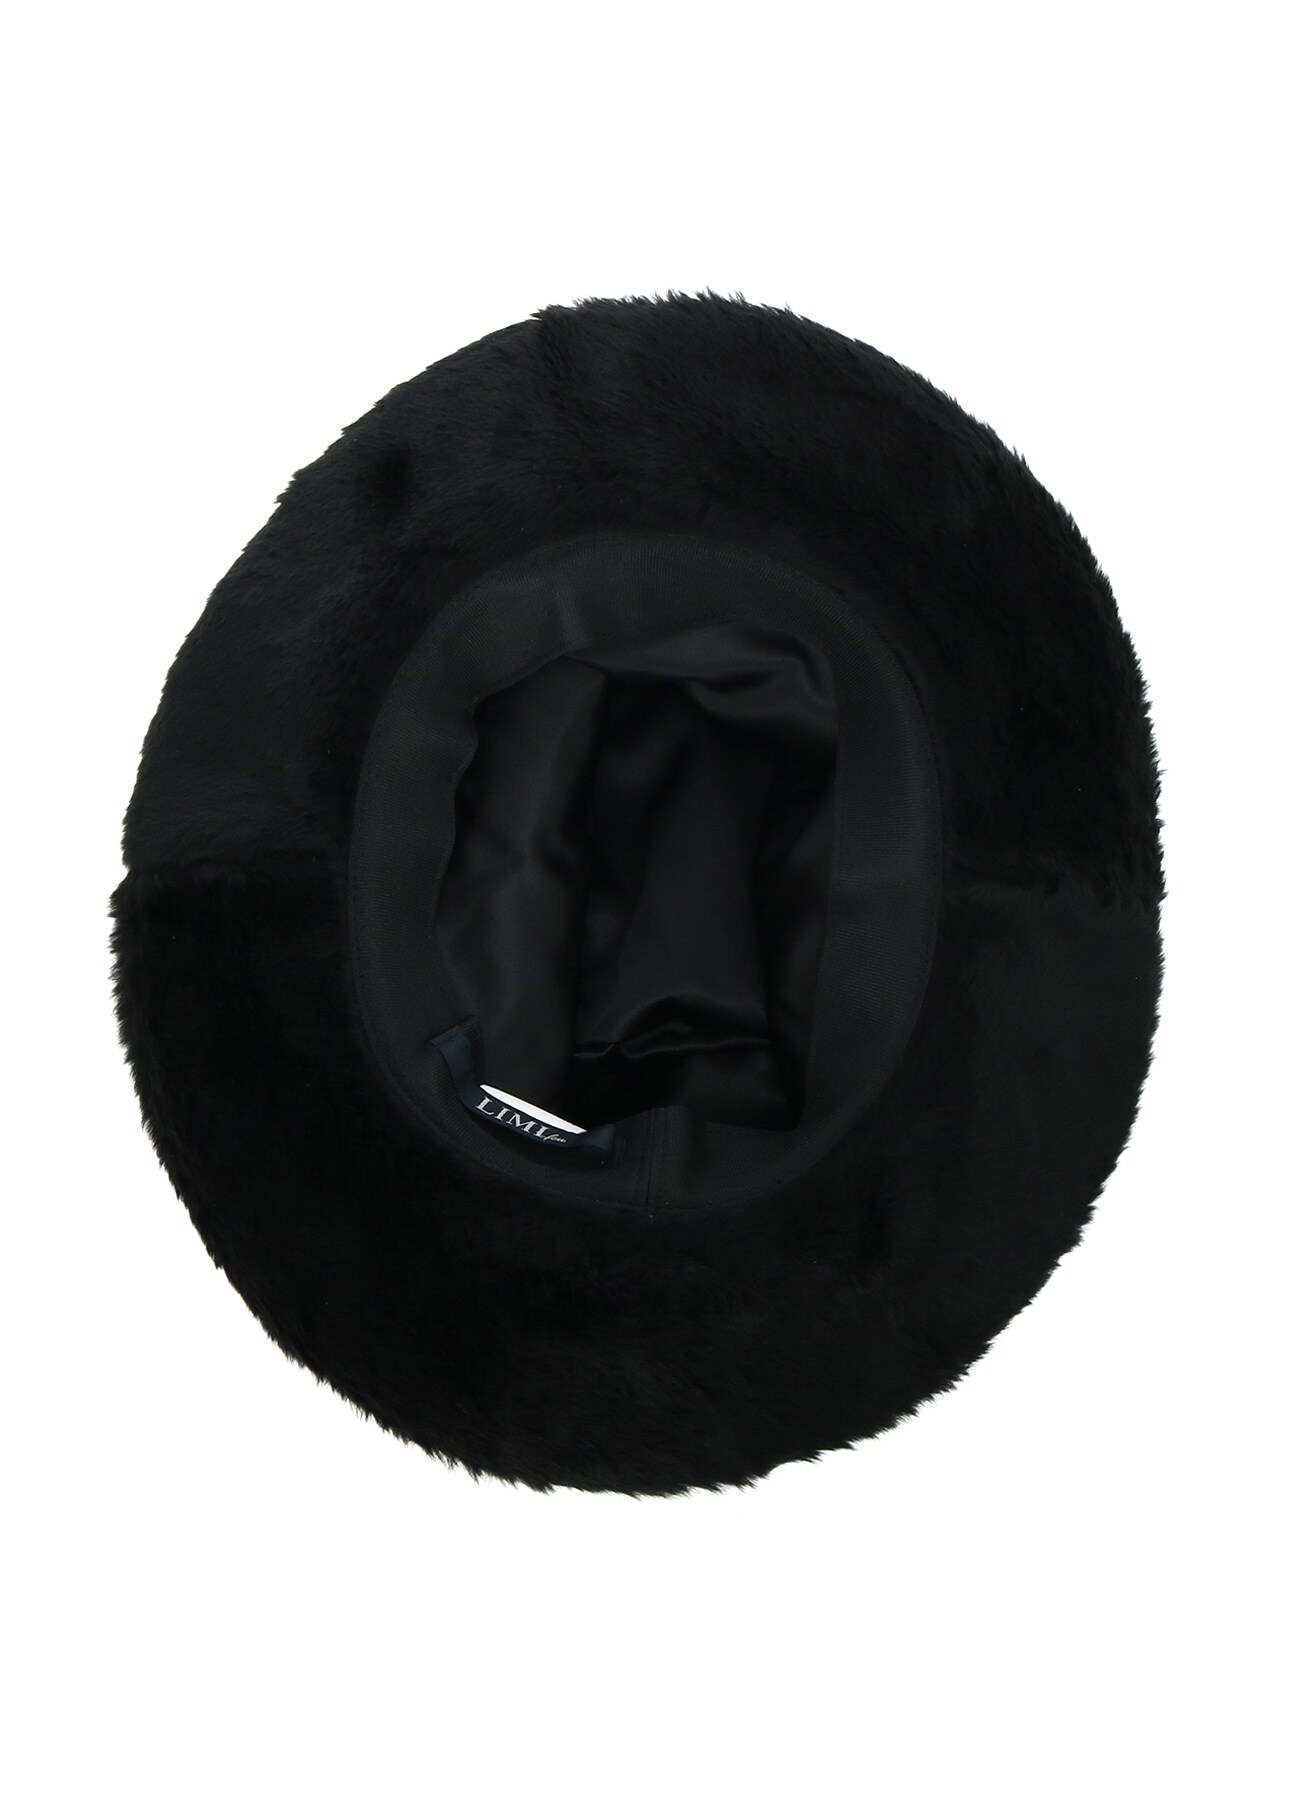 Ac/Fake fur Top Hat A